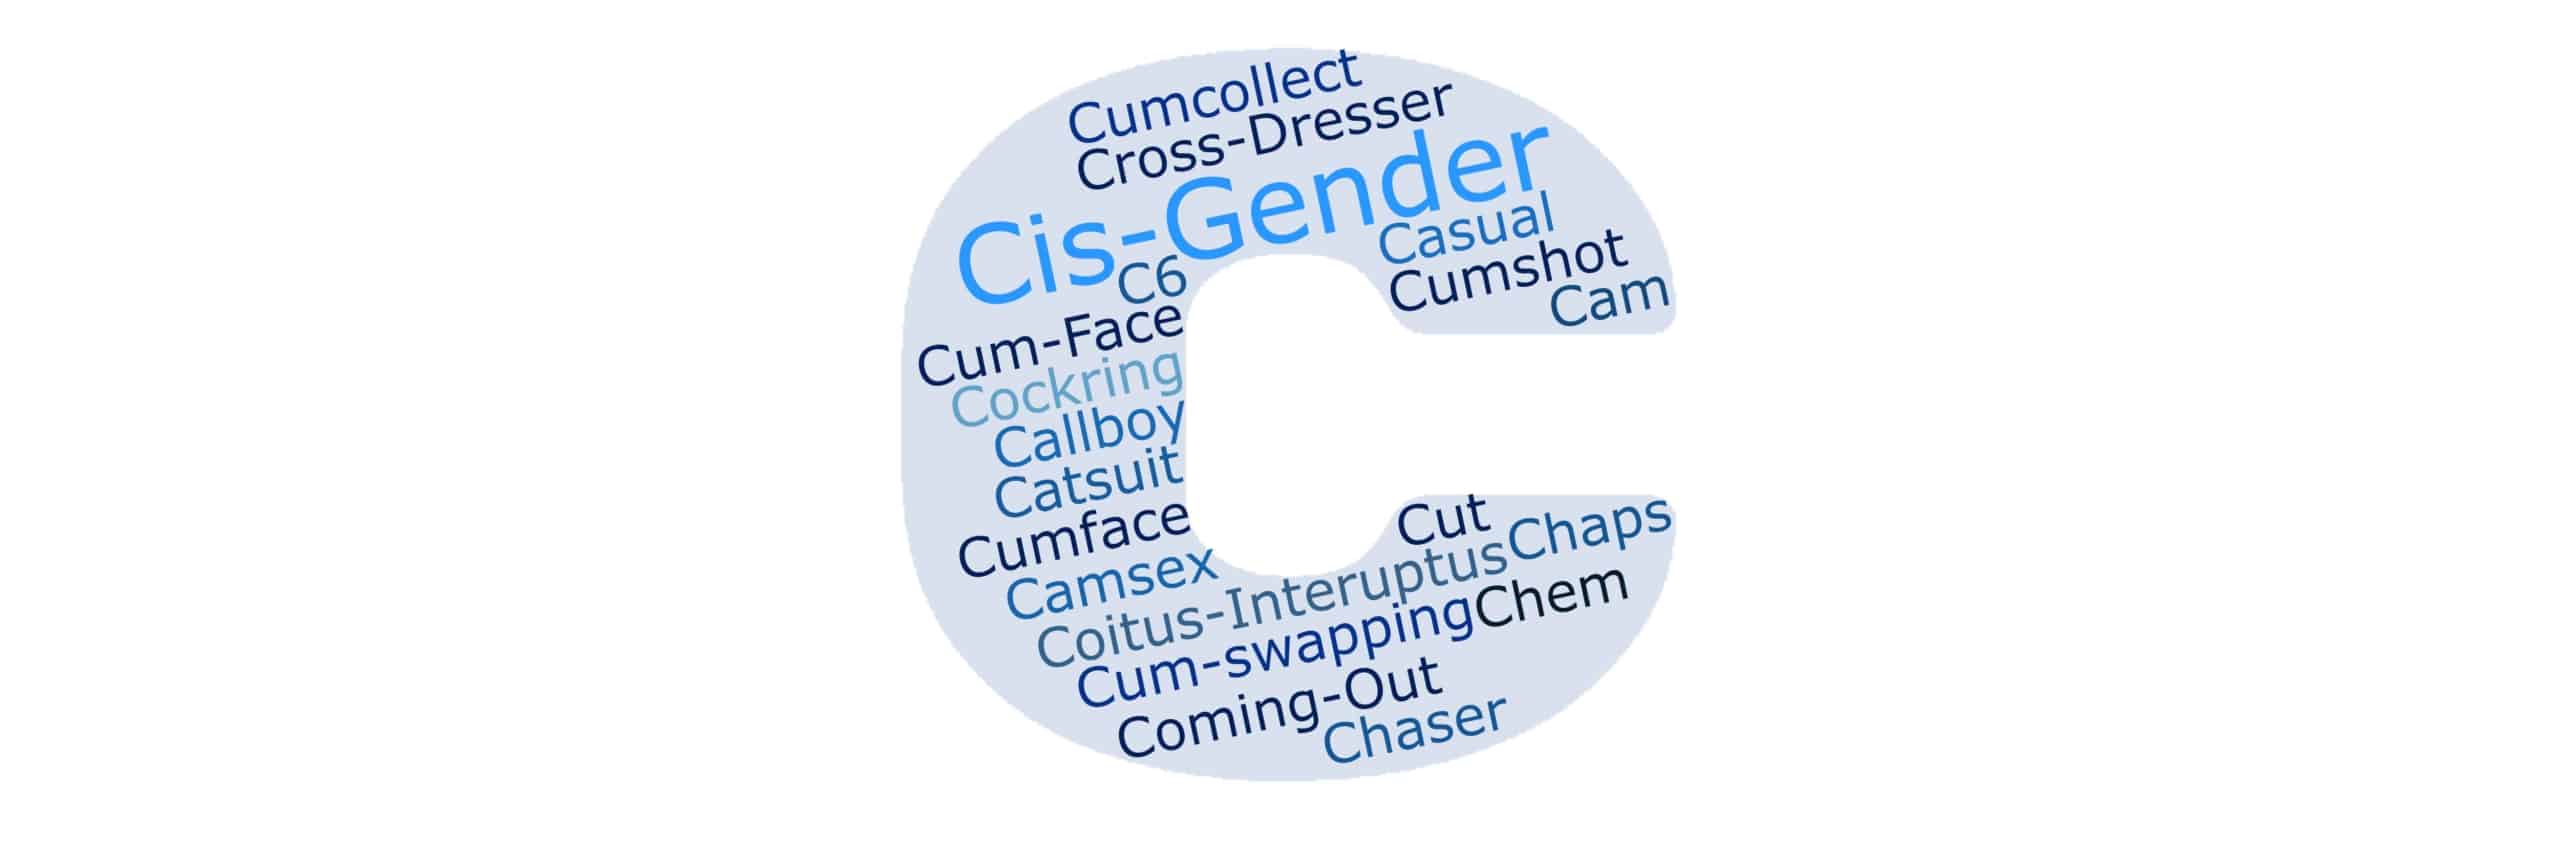 Cis-Gender